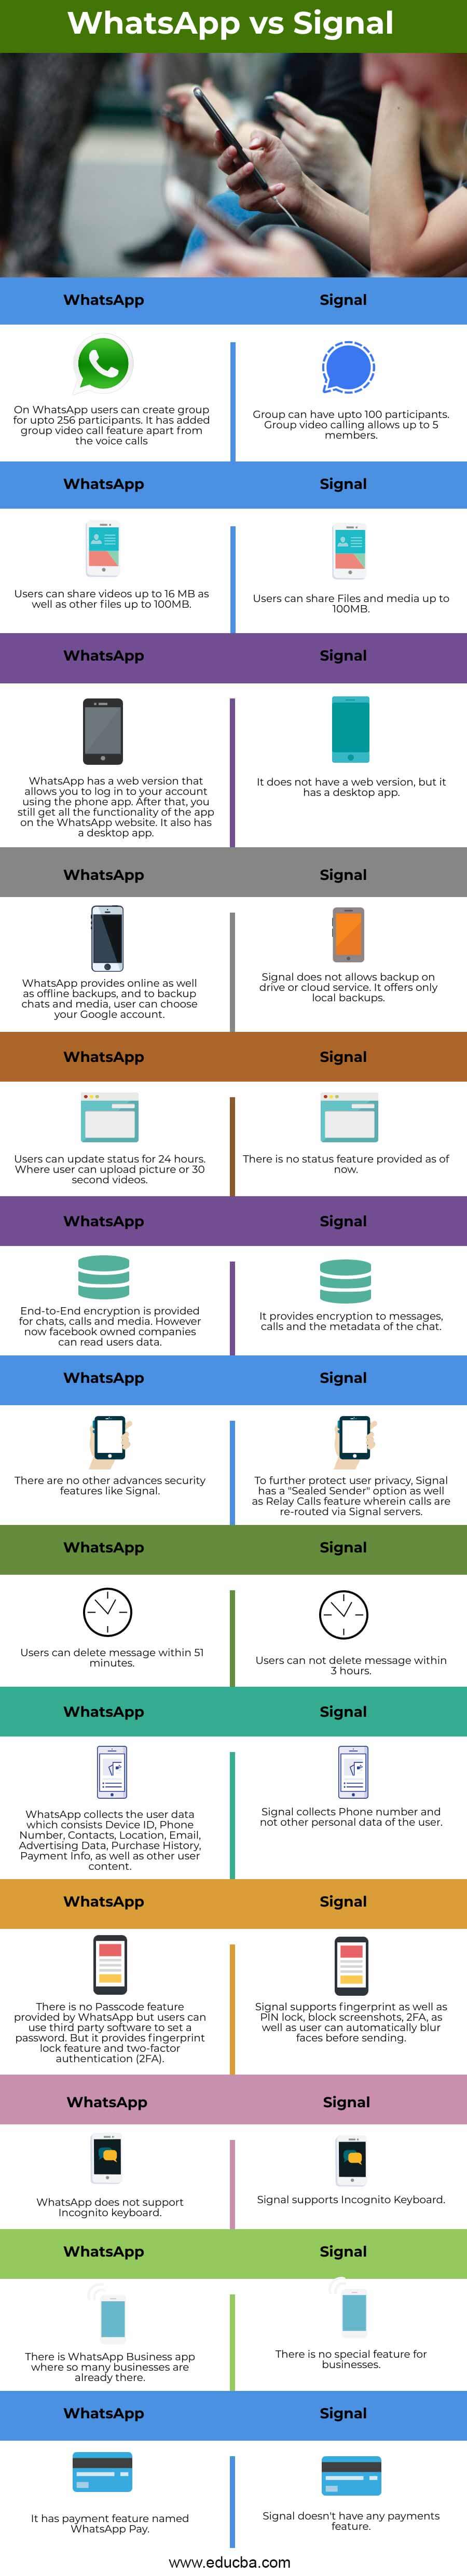 WhatsApp-vs-Signal-info